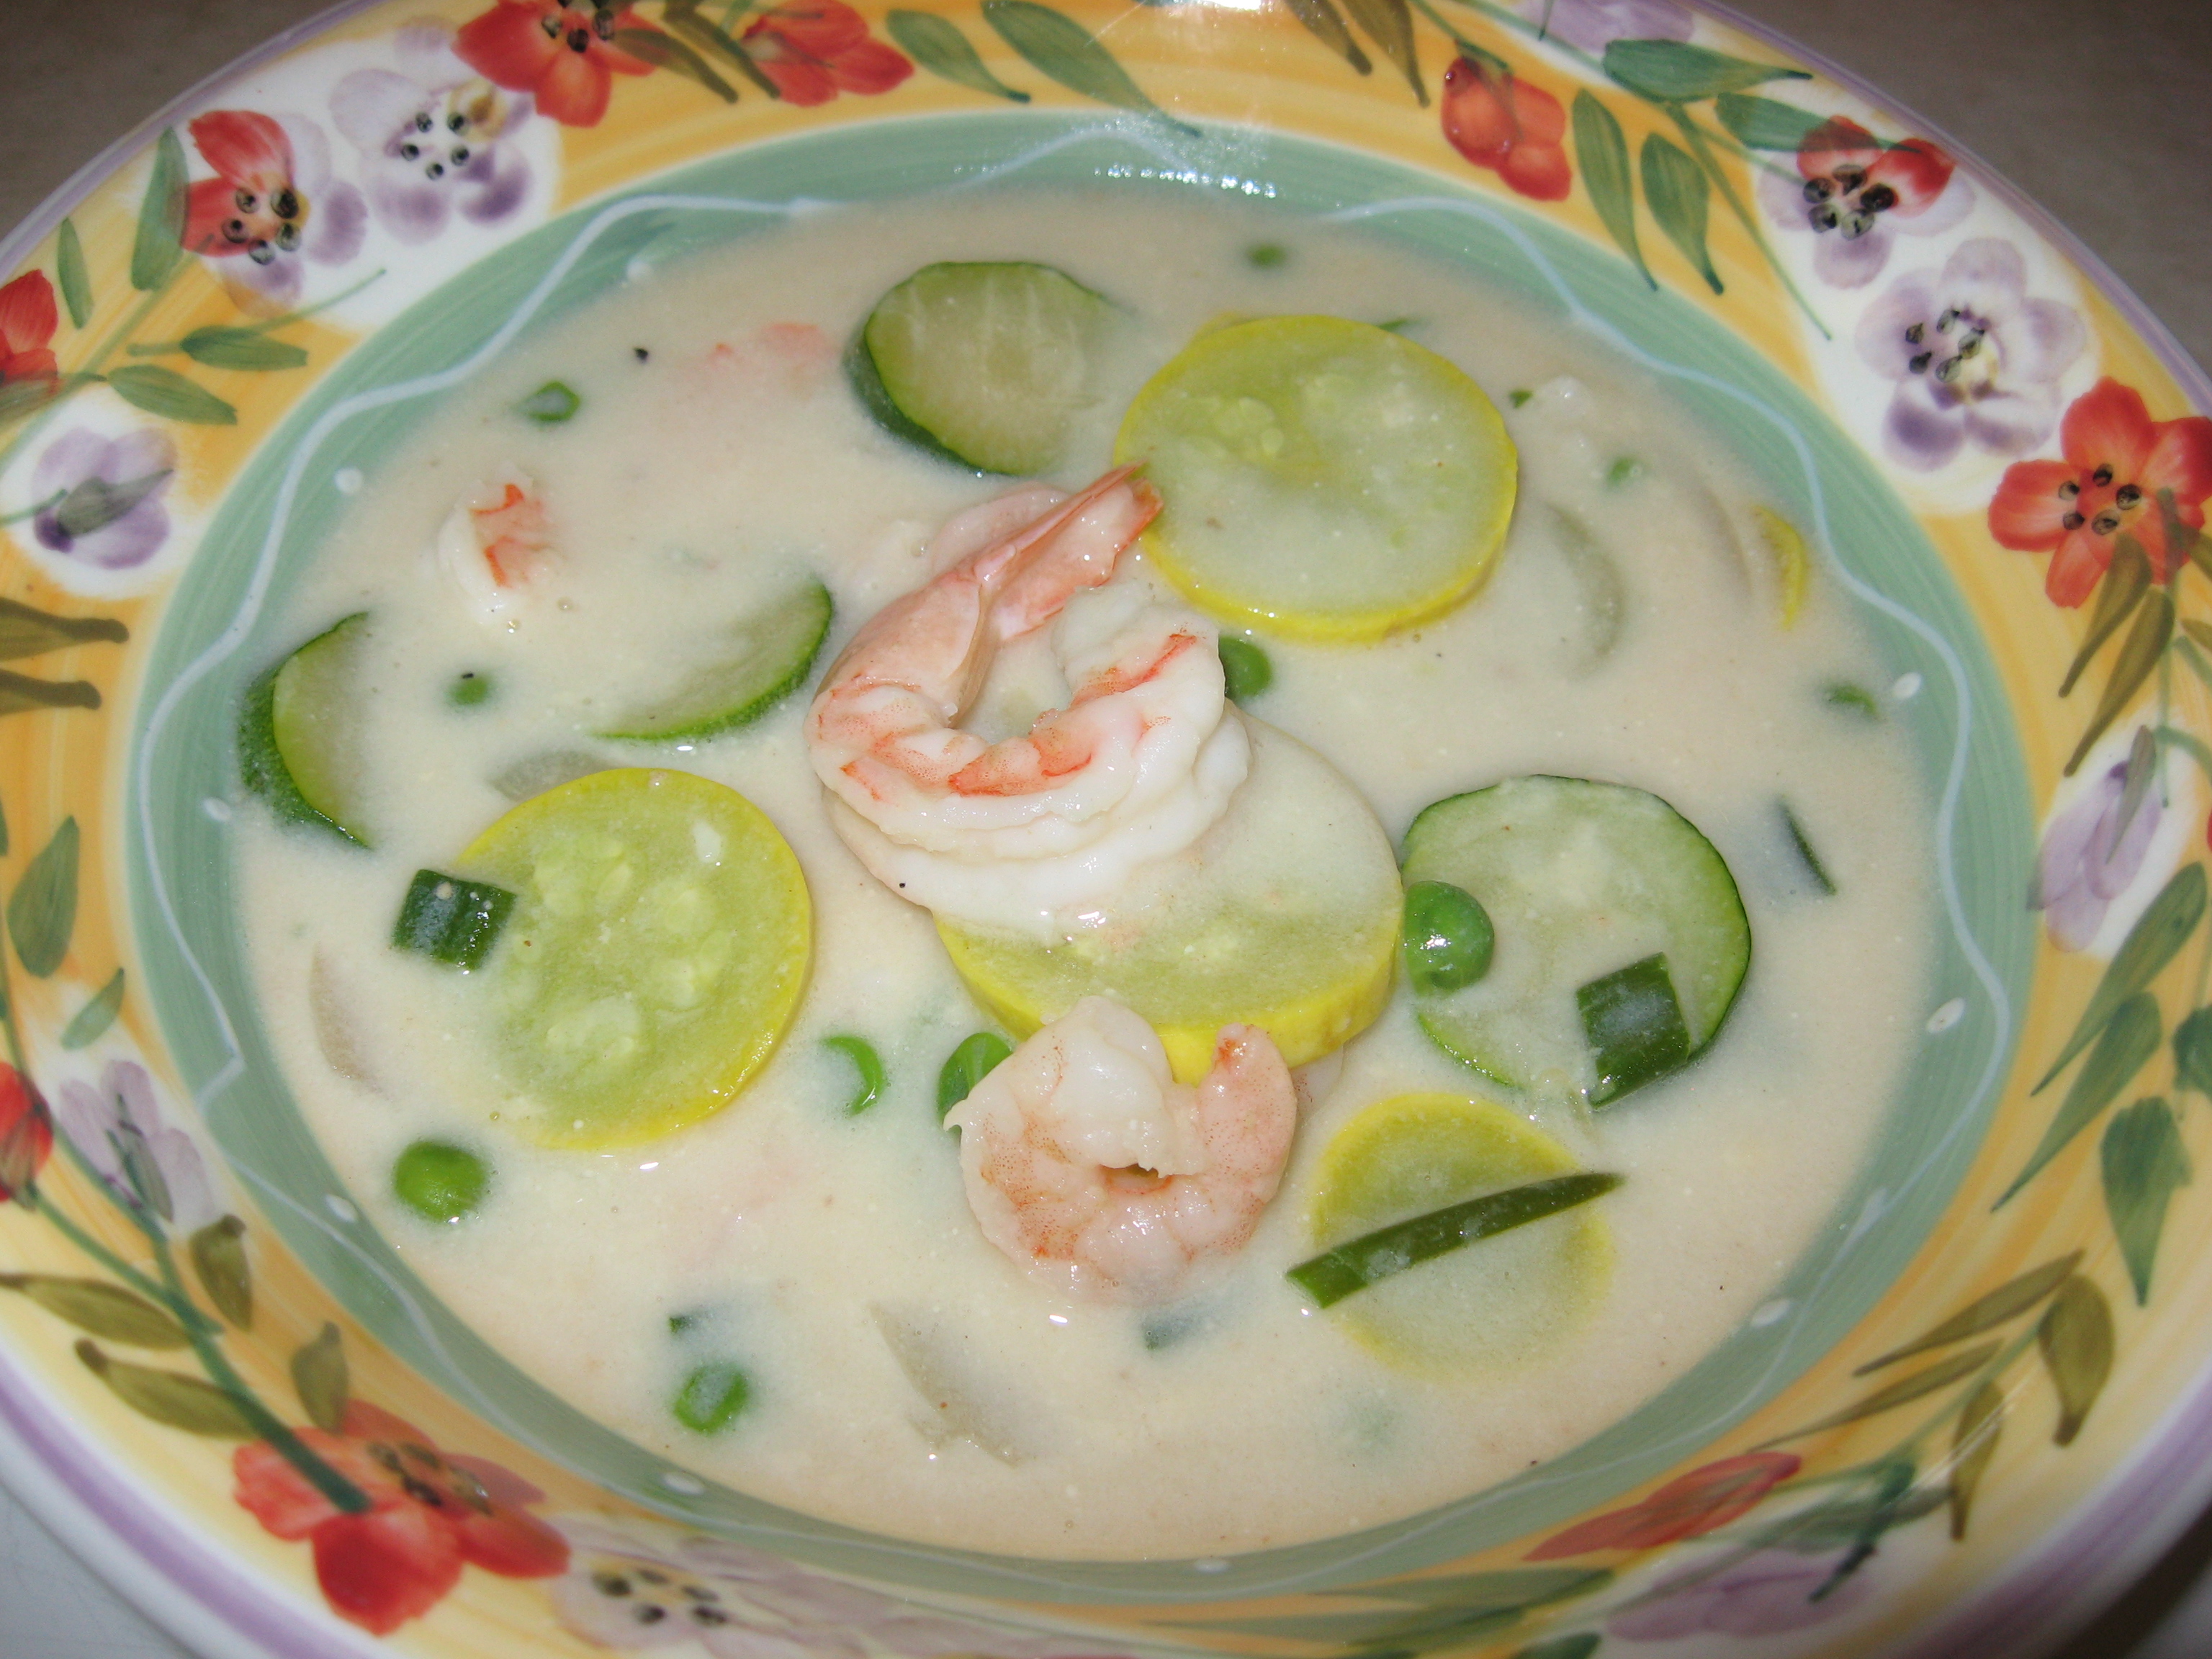 https://tempinnkeeper.files.wordpress.com/2013/02/cream-of-shrimp-soup-close-up.jpg